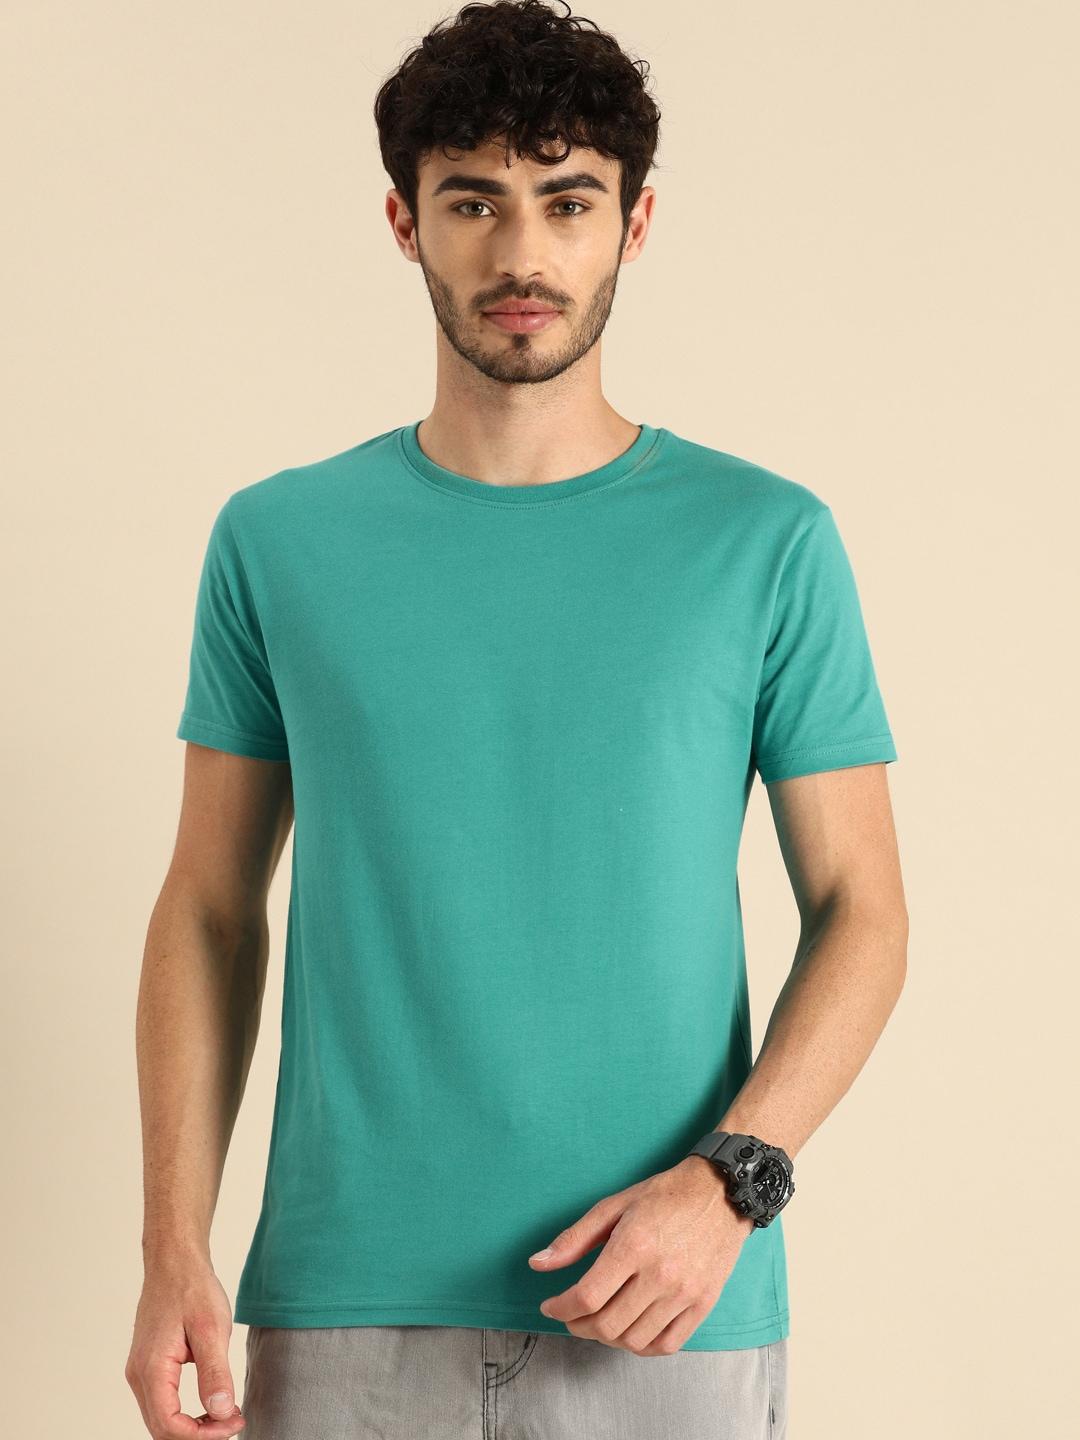 bewakoof-men-teal-green-solid-round-neck-pure-cotton-t-shirt